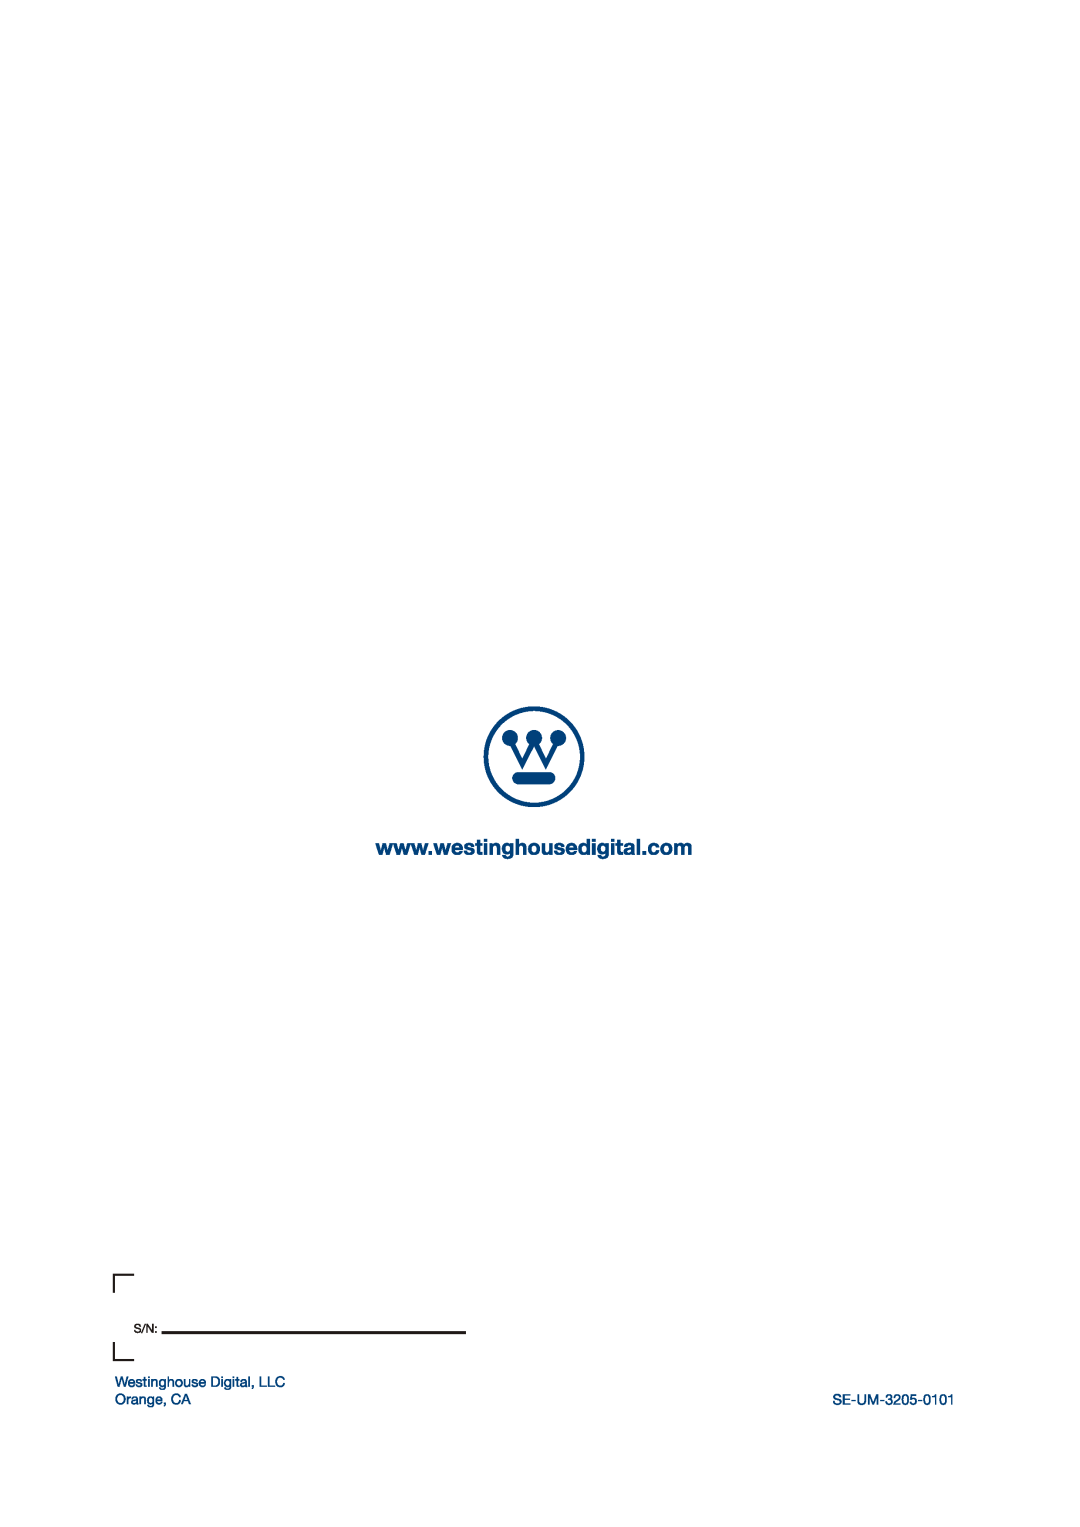 Westinghouse VR-3225 manual 